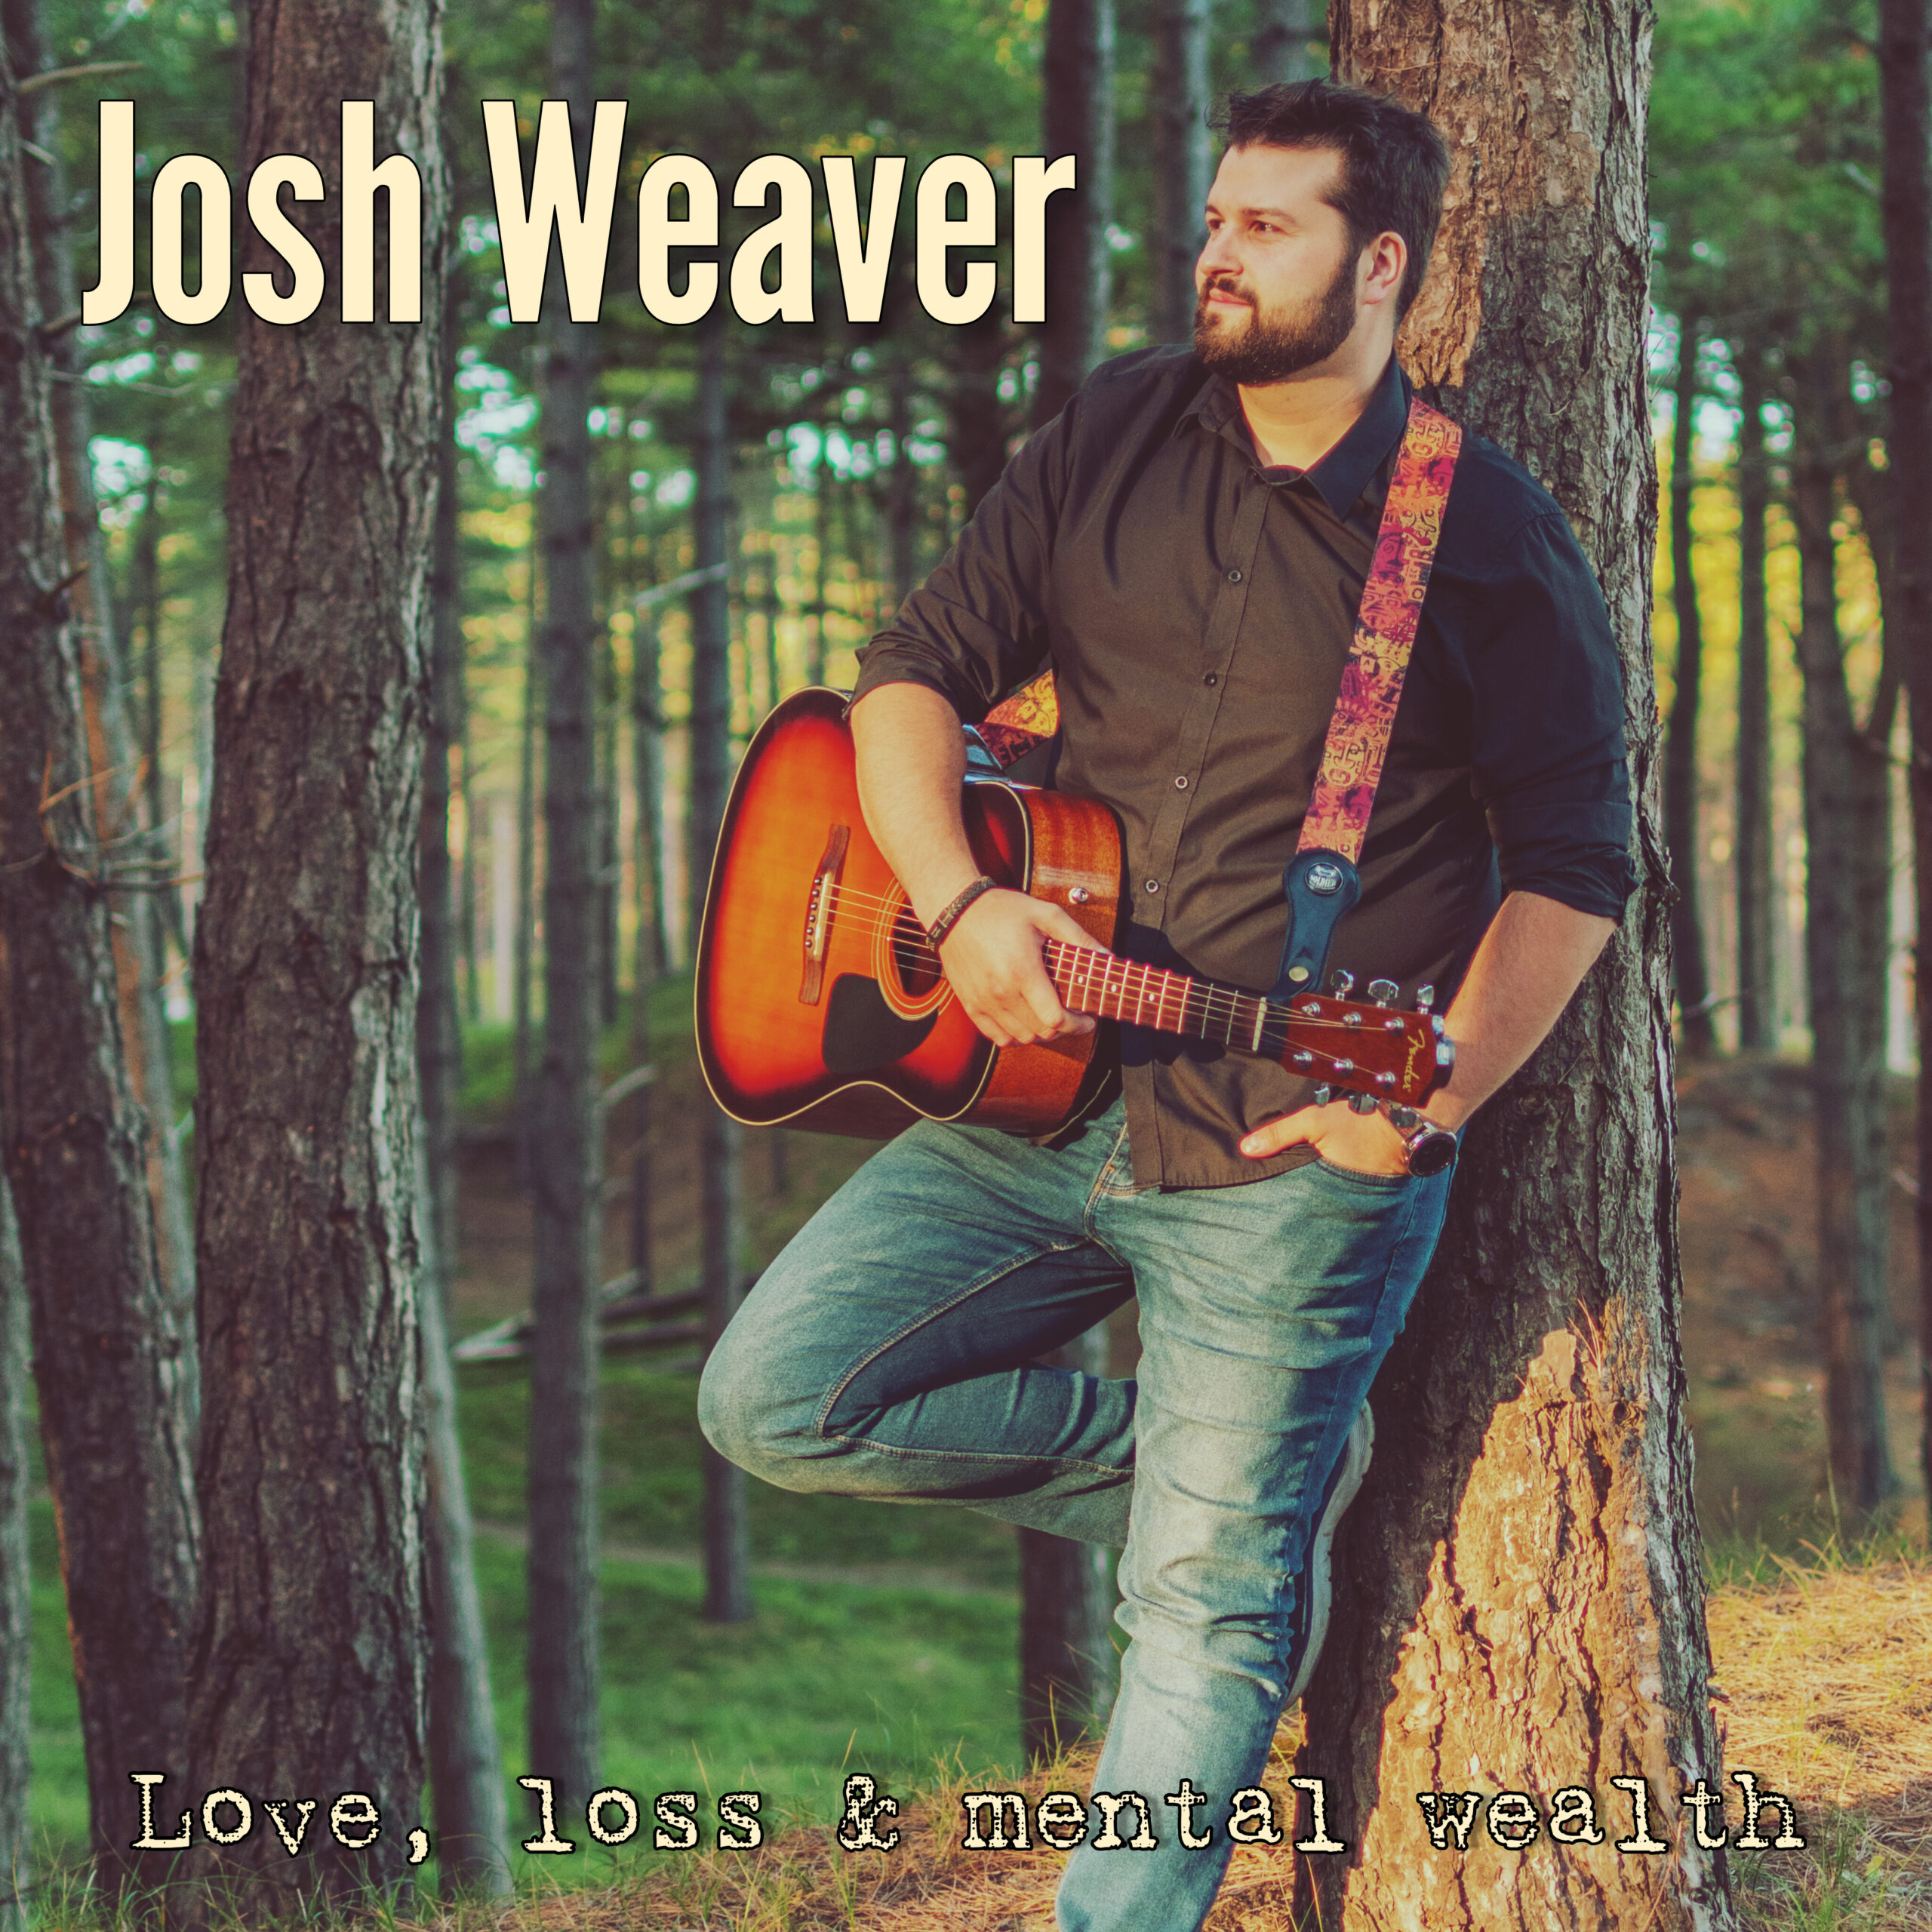 Josh Weaver’s “Love, Loss & Mental Wealth”: An Emotional Musical Voyage